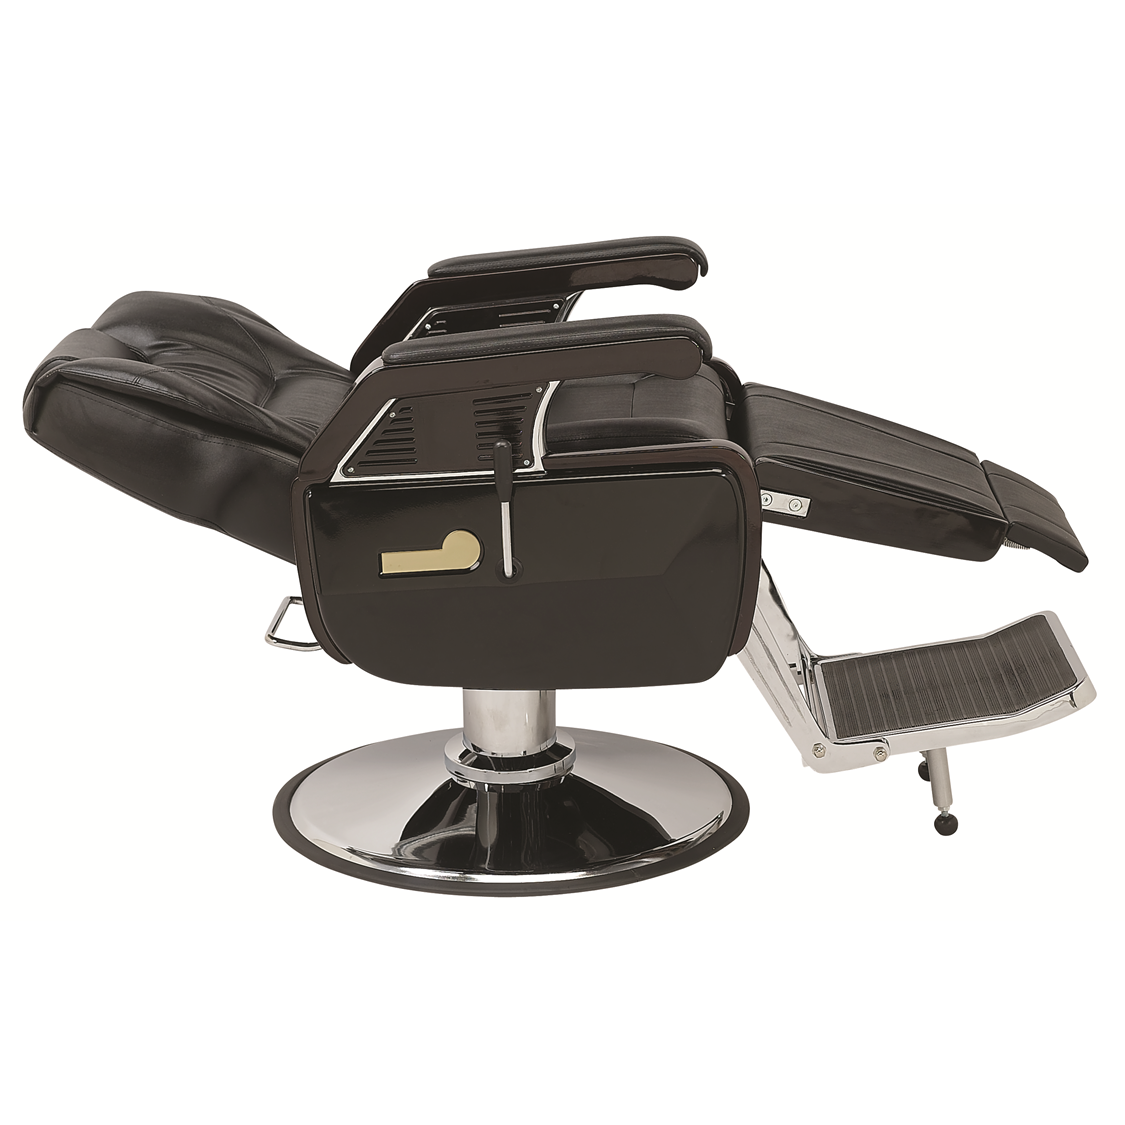 Barrington Barber Chair - Garfield Commercial Enterprises Salon Equipment Spa Furniture Barber Chair Luxury